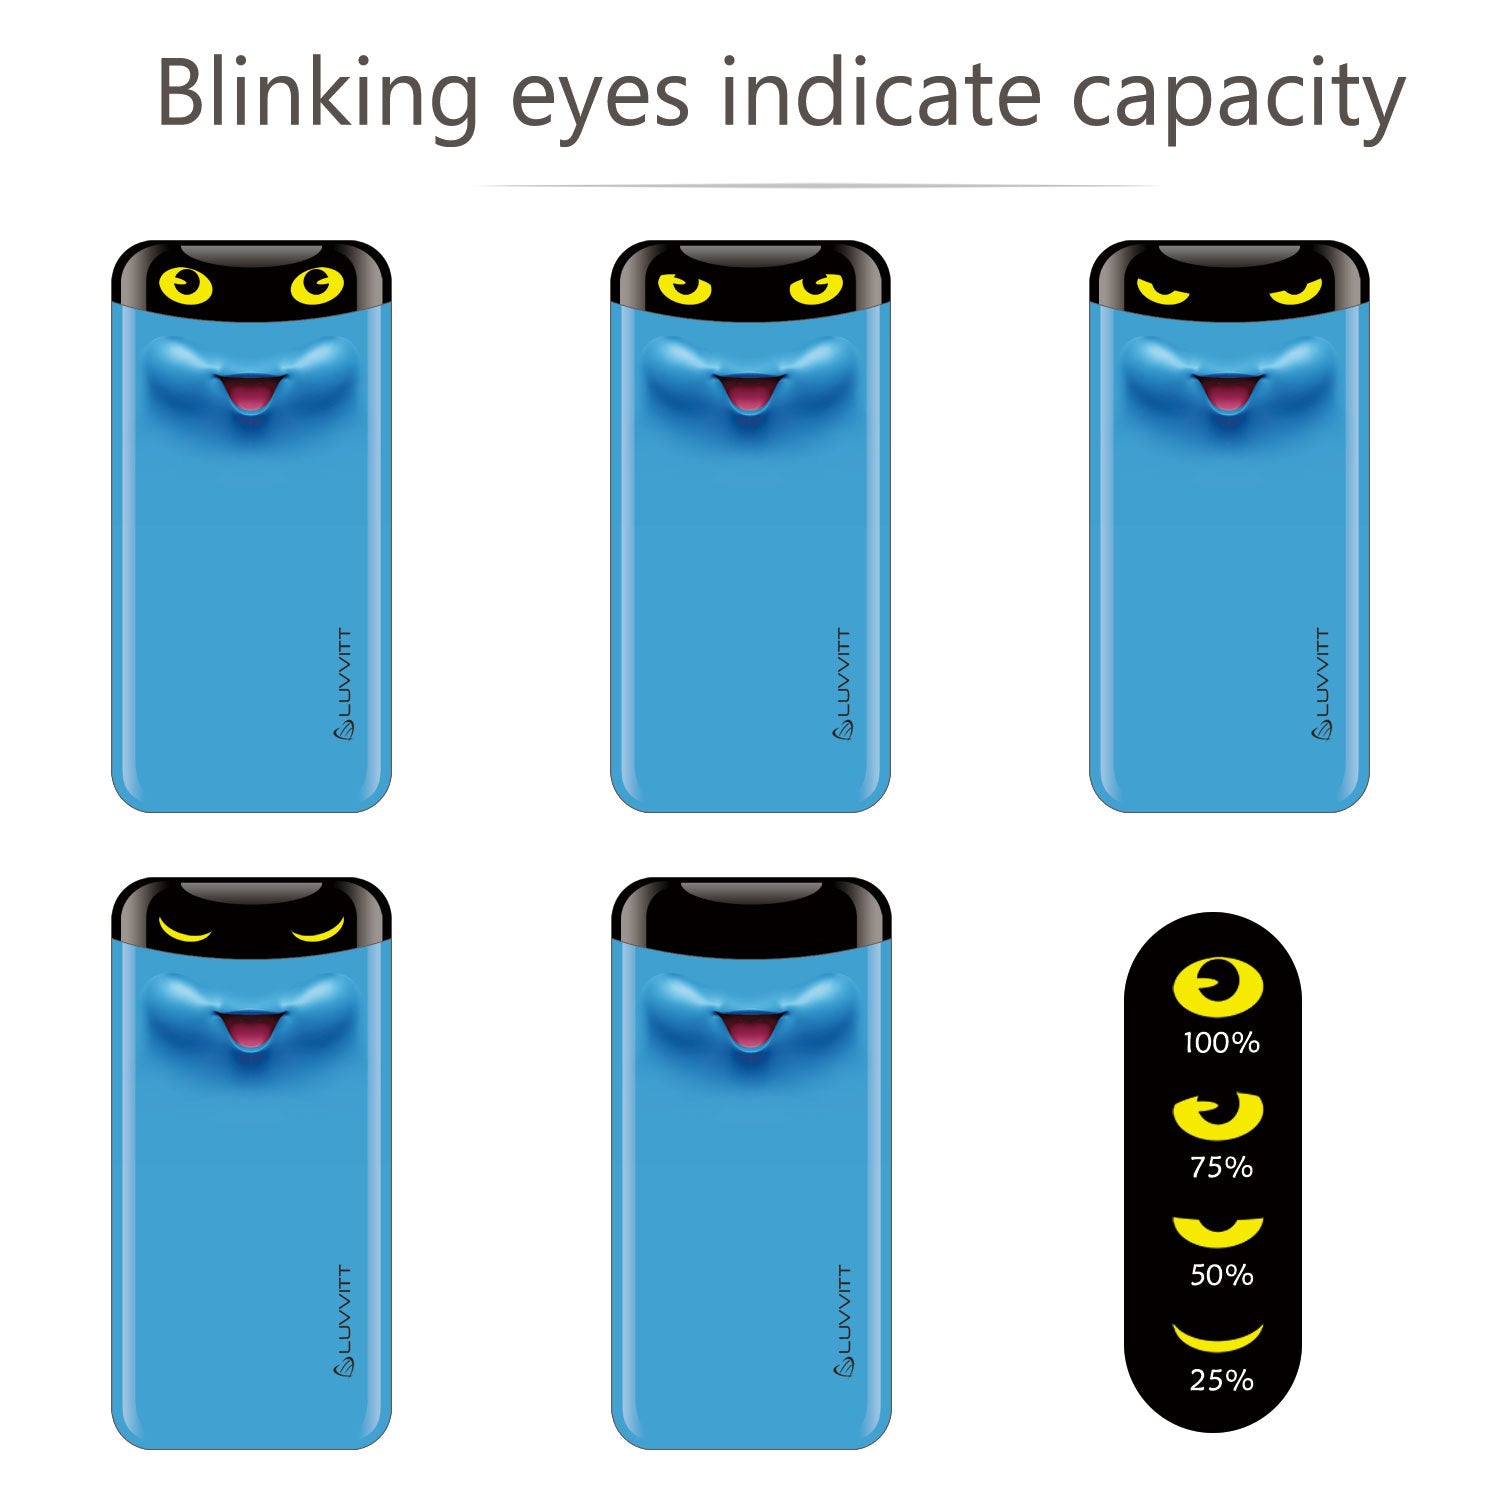 LUVVITT EMOJI Power Bank 6000 mAh Ultra Slim Portable Charger - Emoji Blue